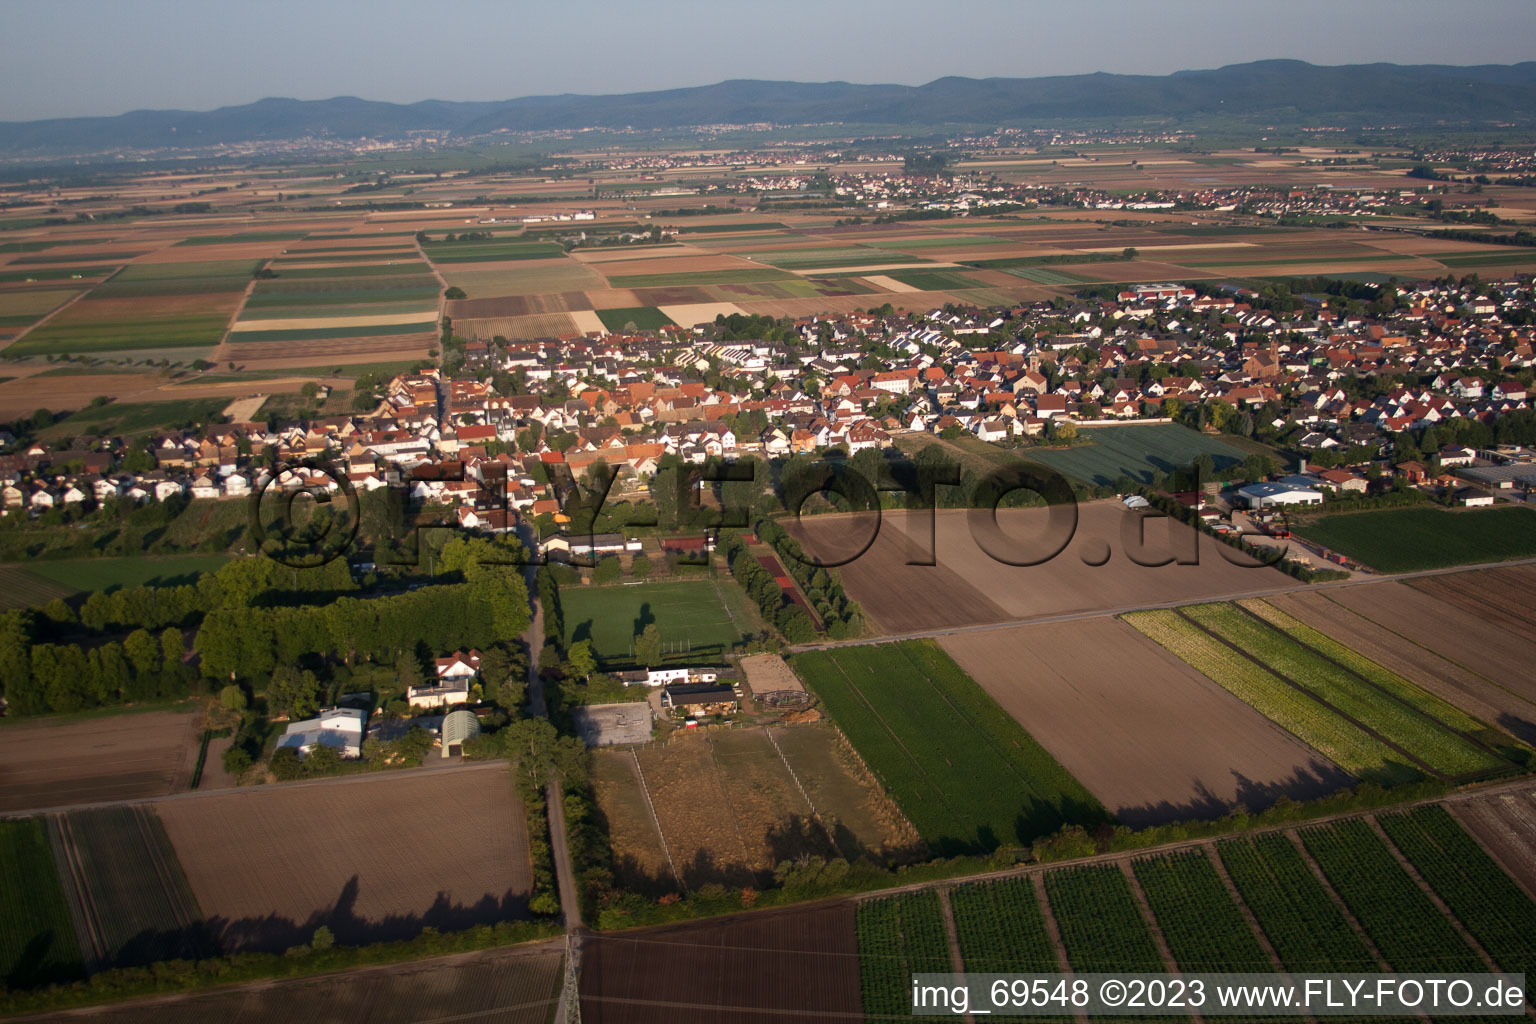 District Dannstadt in Dannstadt-Schauernheim in the state Rhineland-Palatinate, Germany out of the air